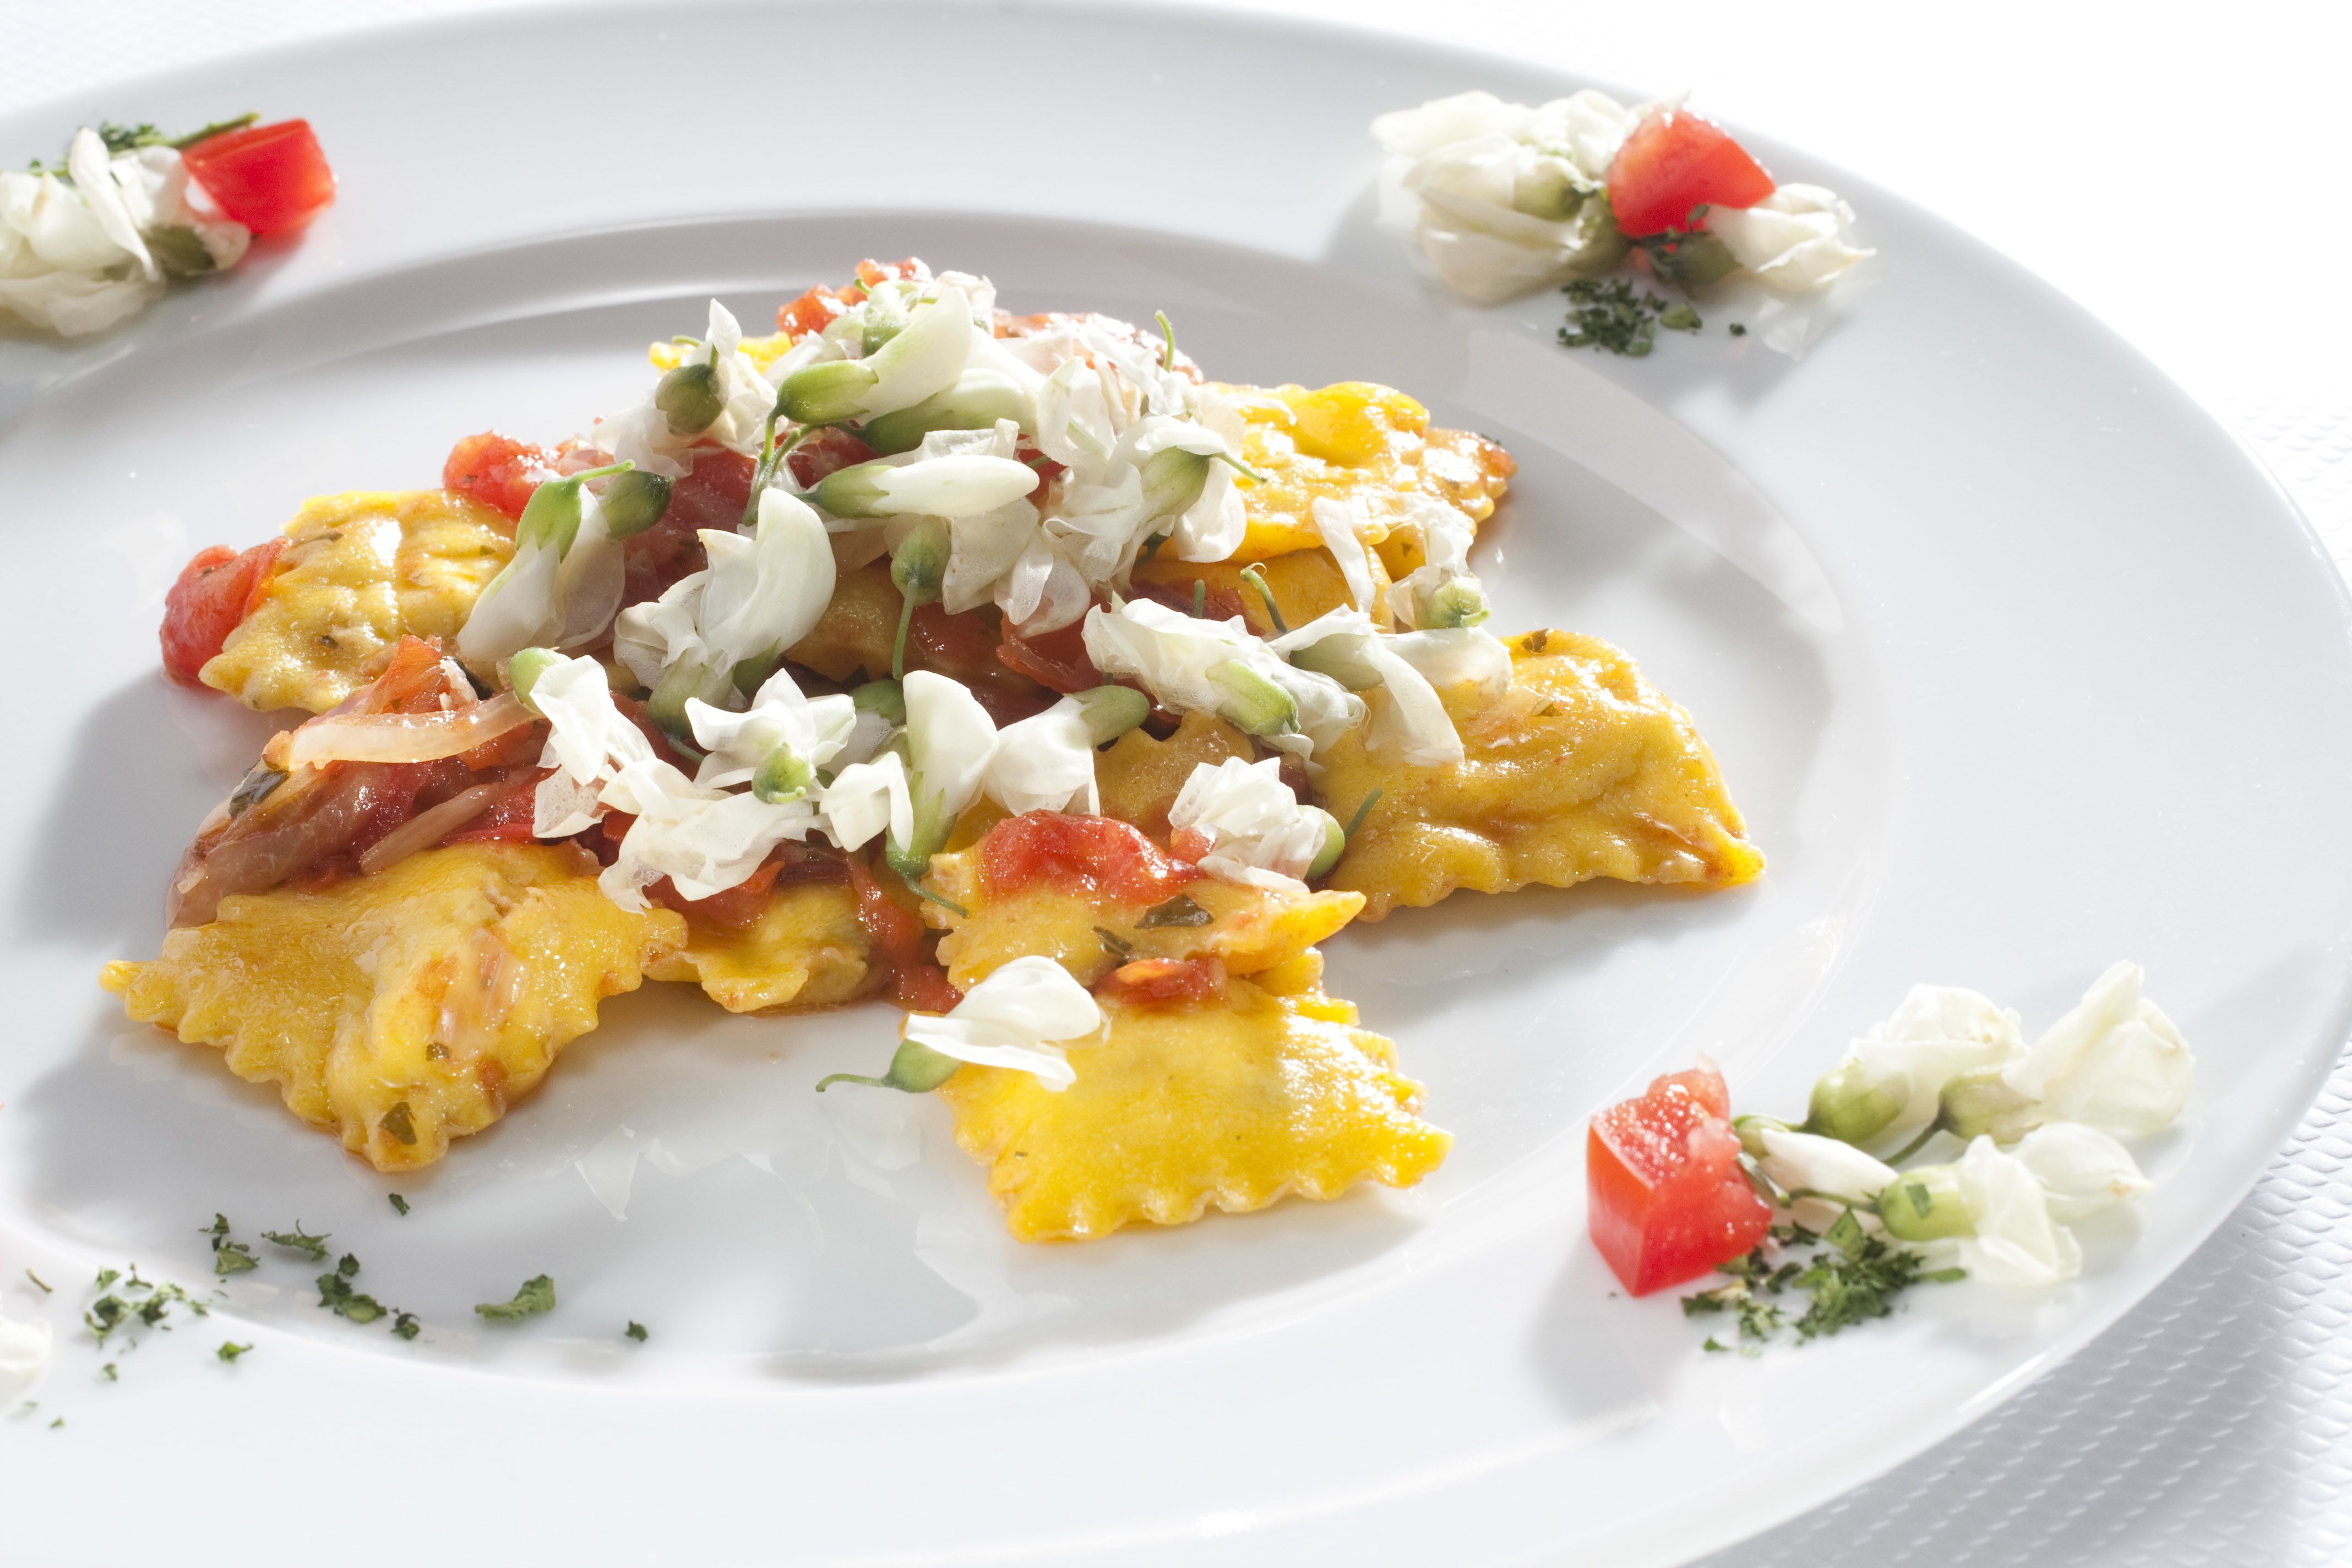 Sicilian Cuisine - 7 Fundamental Ingredients - La Cucina Italiana